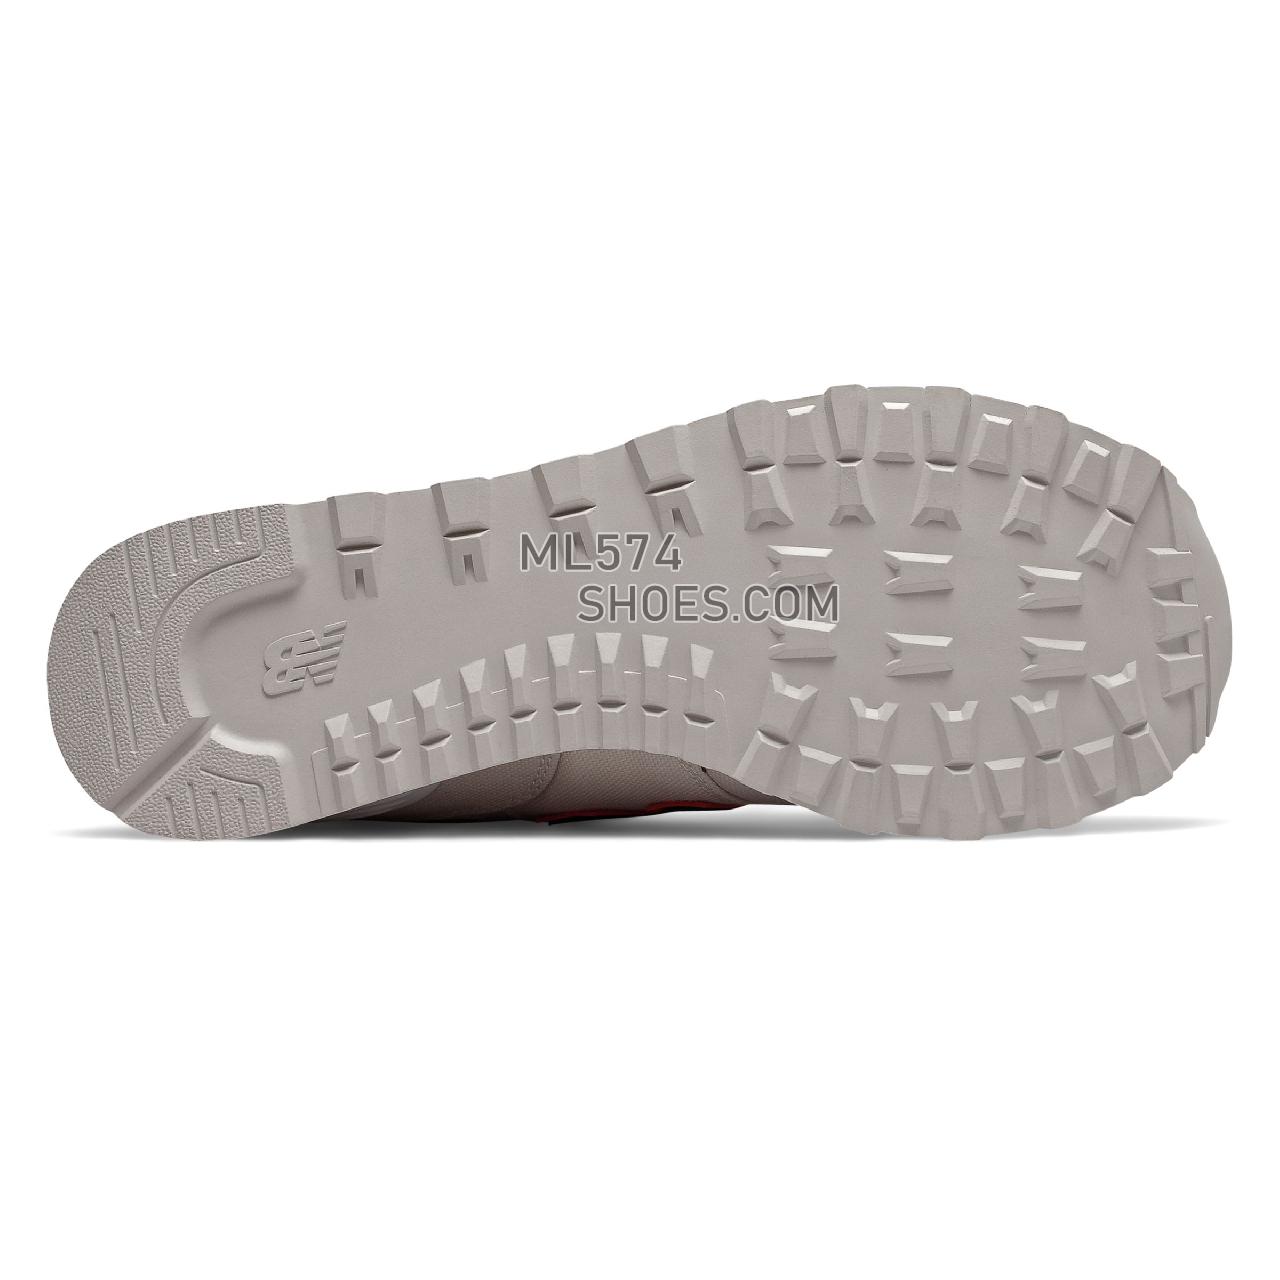 New Balance 574 - Men's Classic Sneakers - Linen Fog with White - ML574SOM